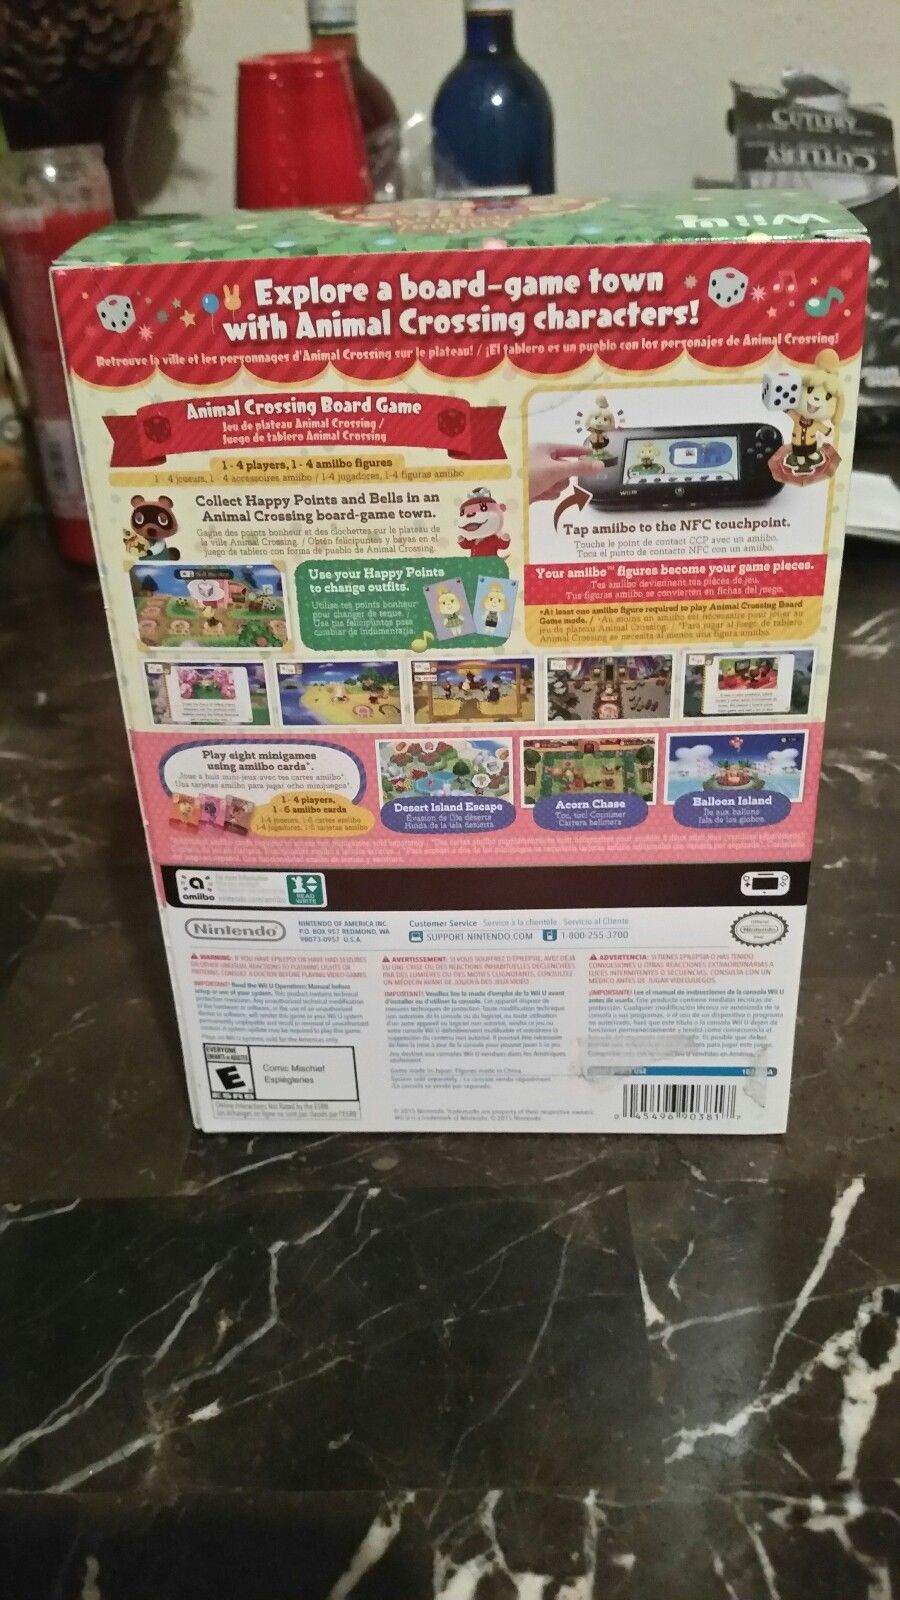 Animal Crossing: amiibo Festival Bundle - Wii U